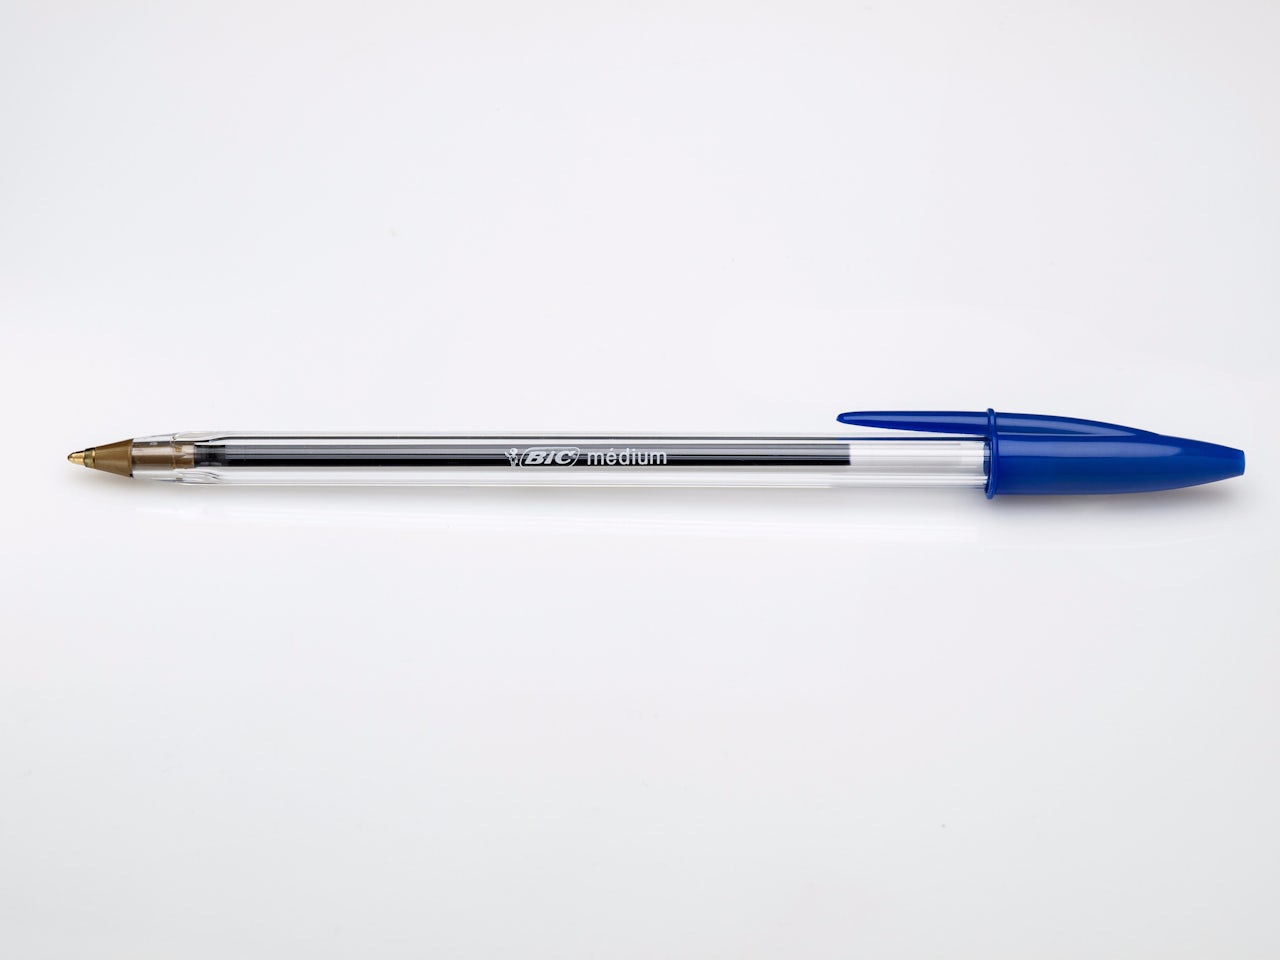 Bic Cristal Ballpoint Pens